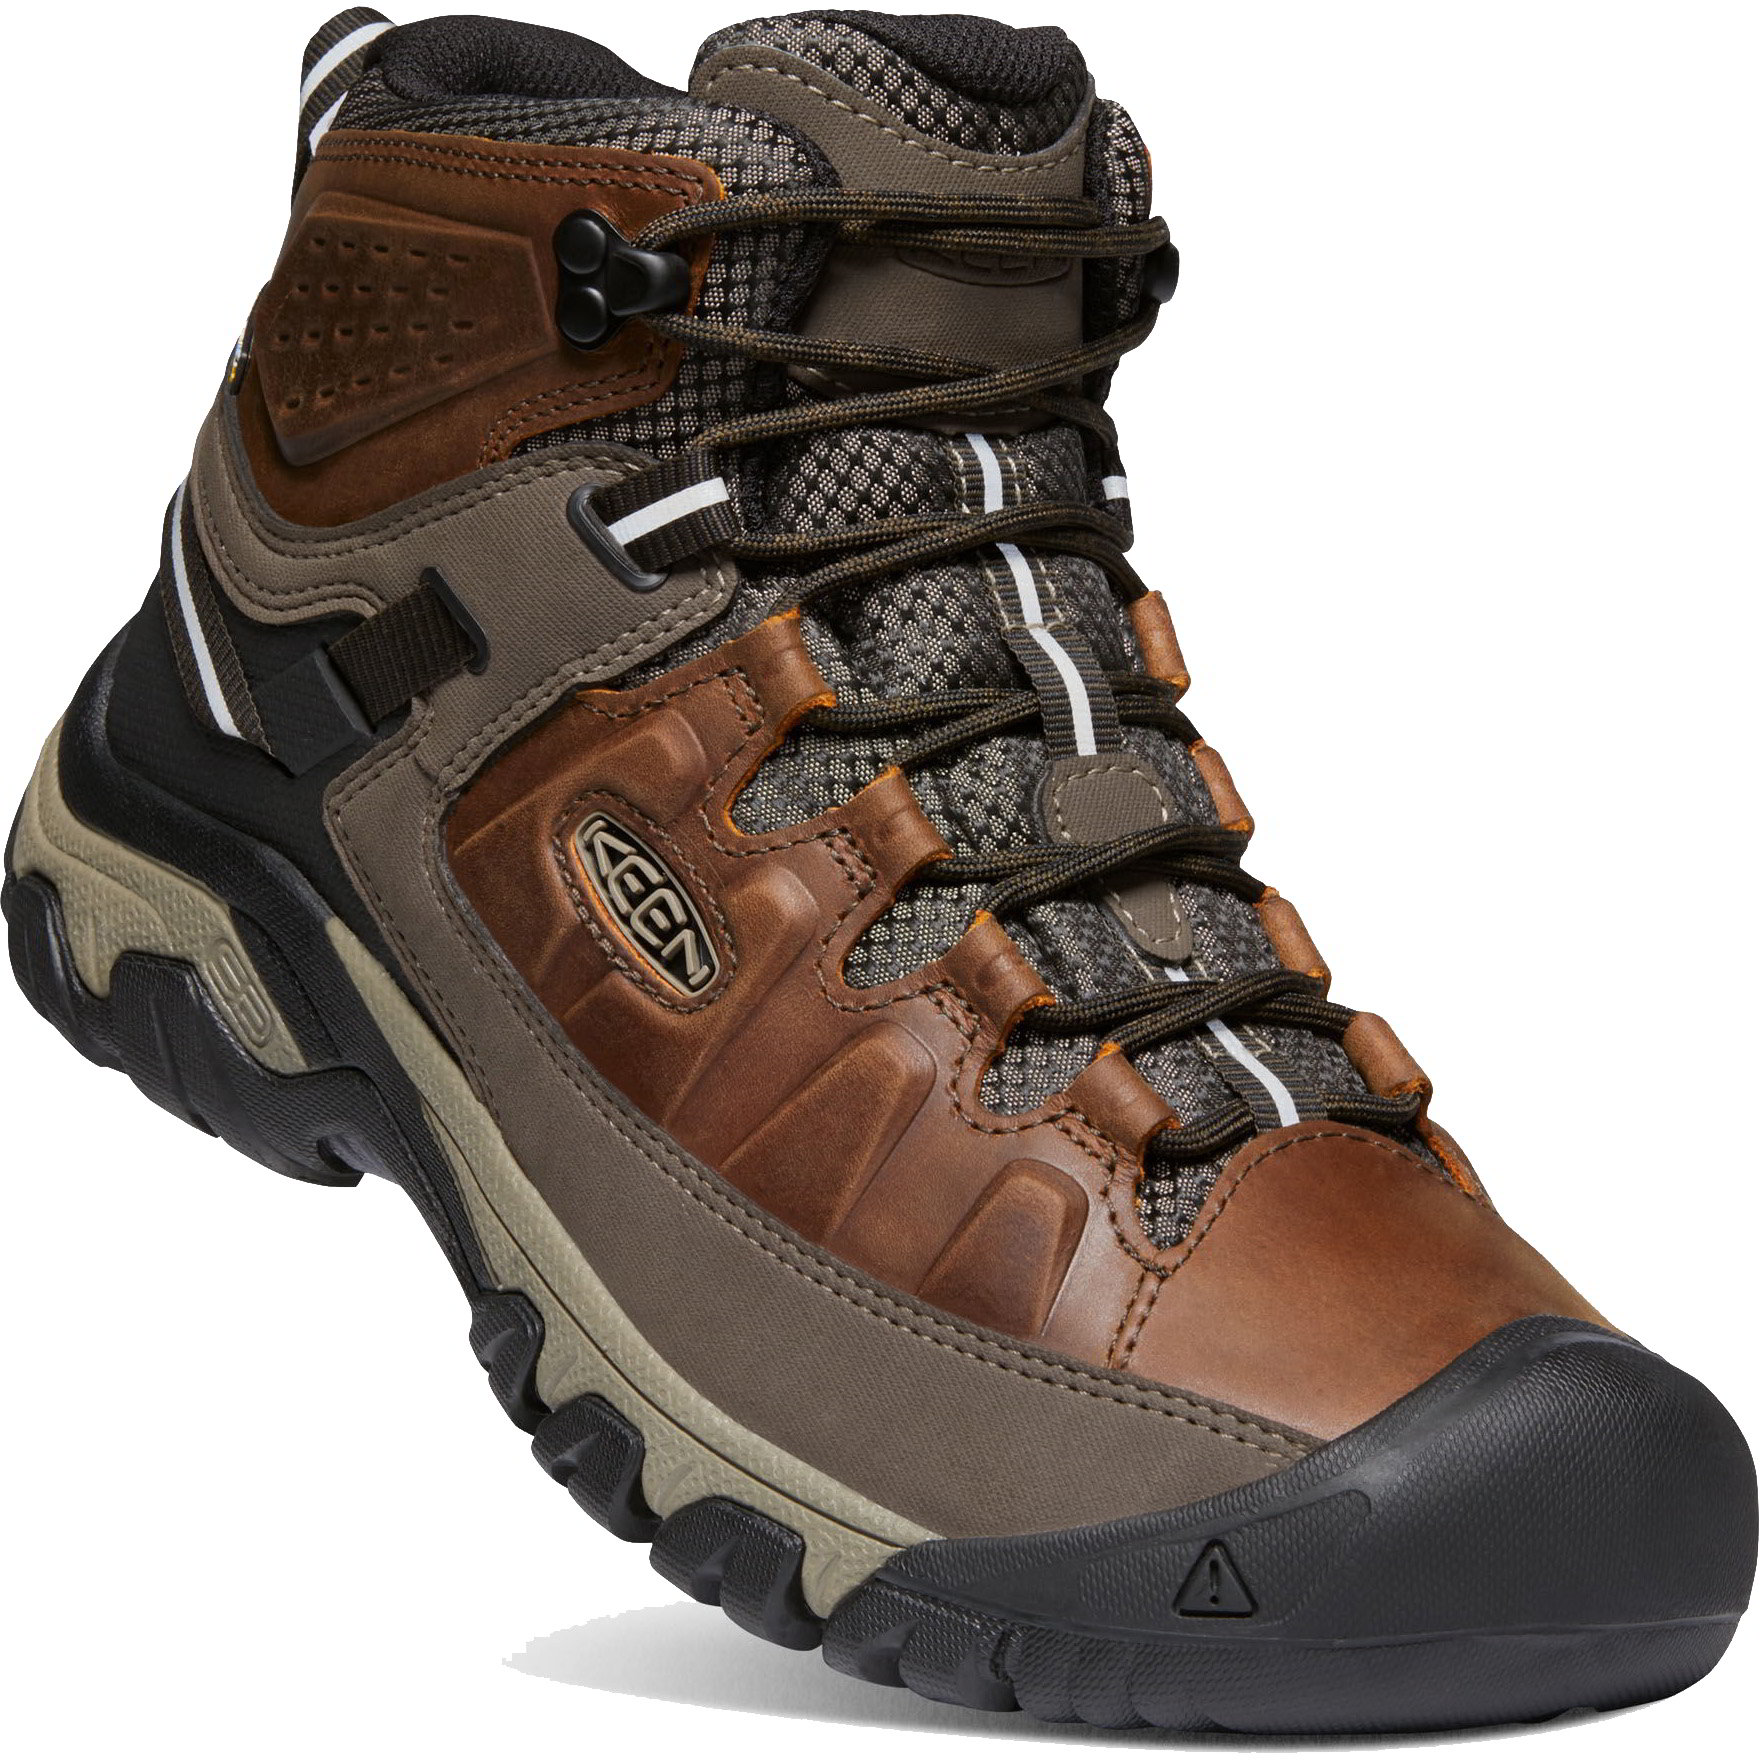 Keen Men's Targhee III Mid WP Waterproof Walking Hiking Boots - UK 8 / EU 42 / US 9